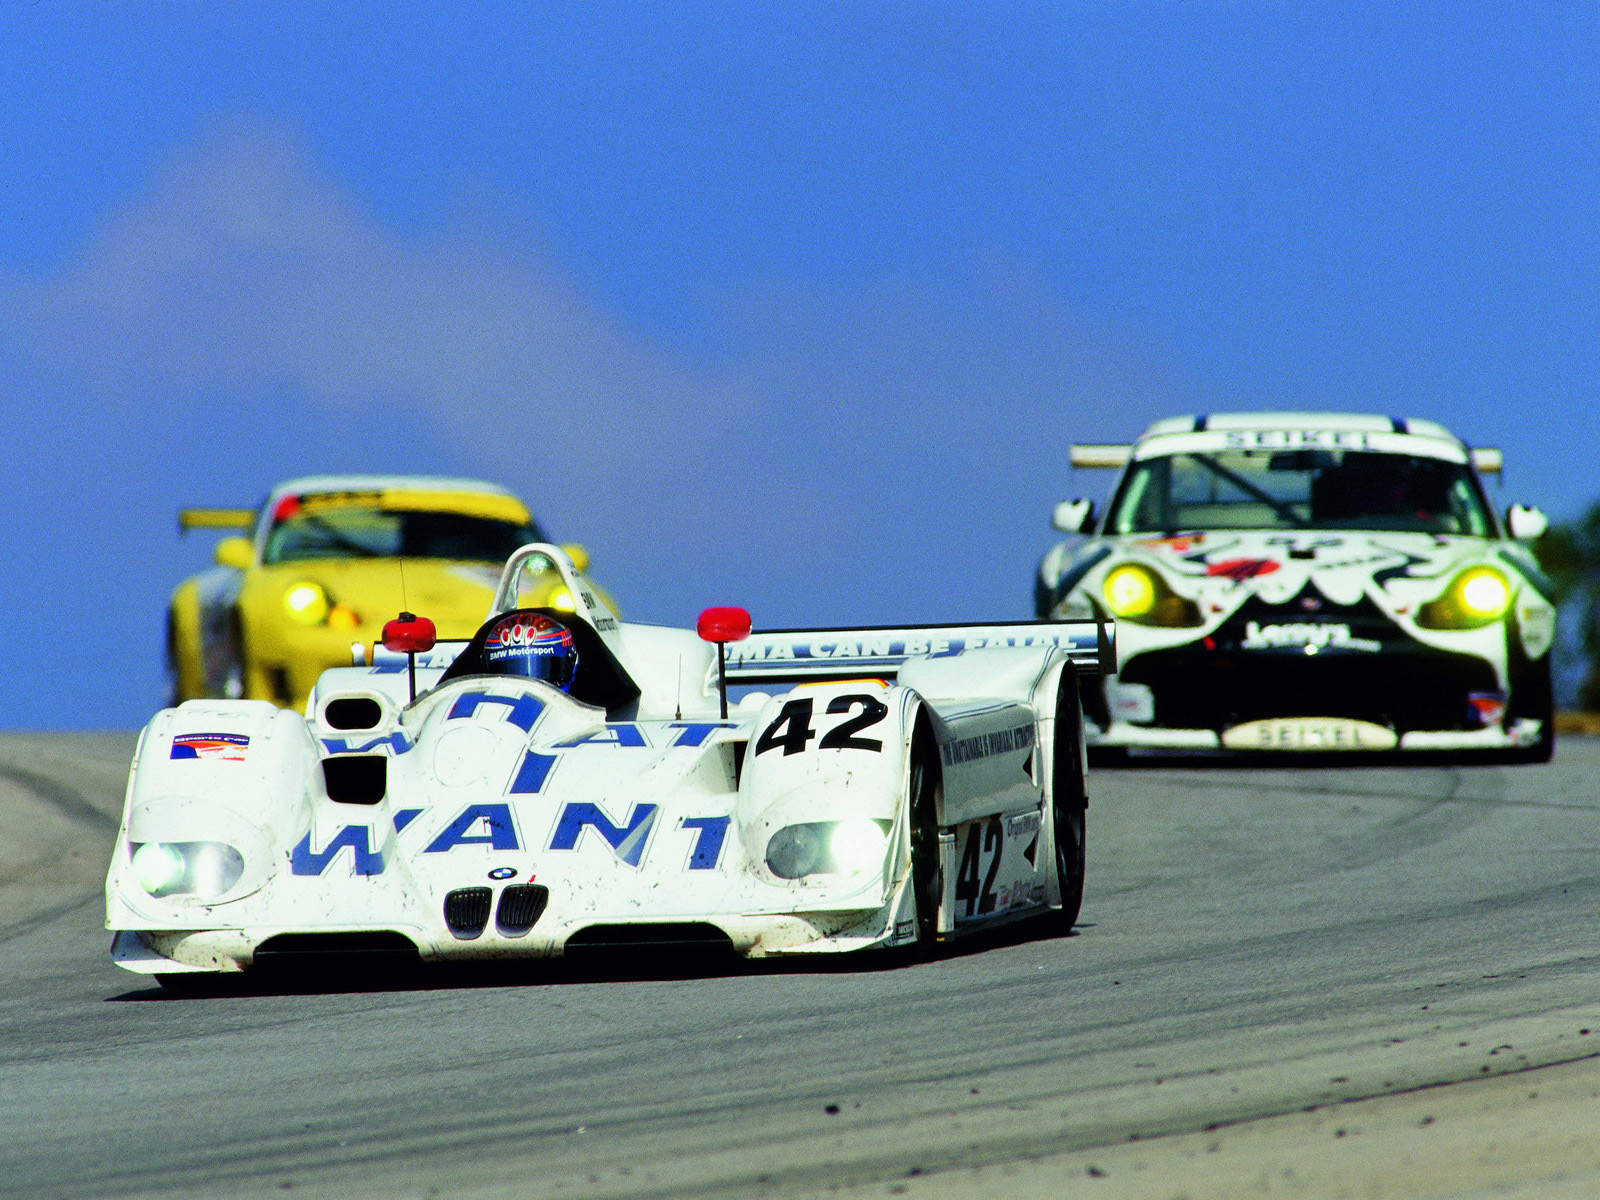 1999, Bmw, V12, Lmr, Le mans, Race, Racing Wallpaper